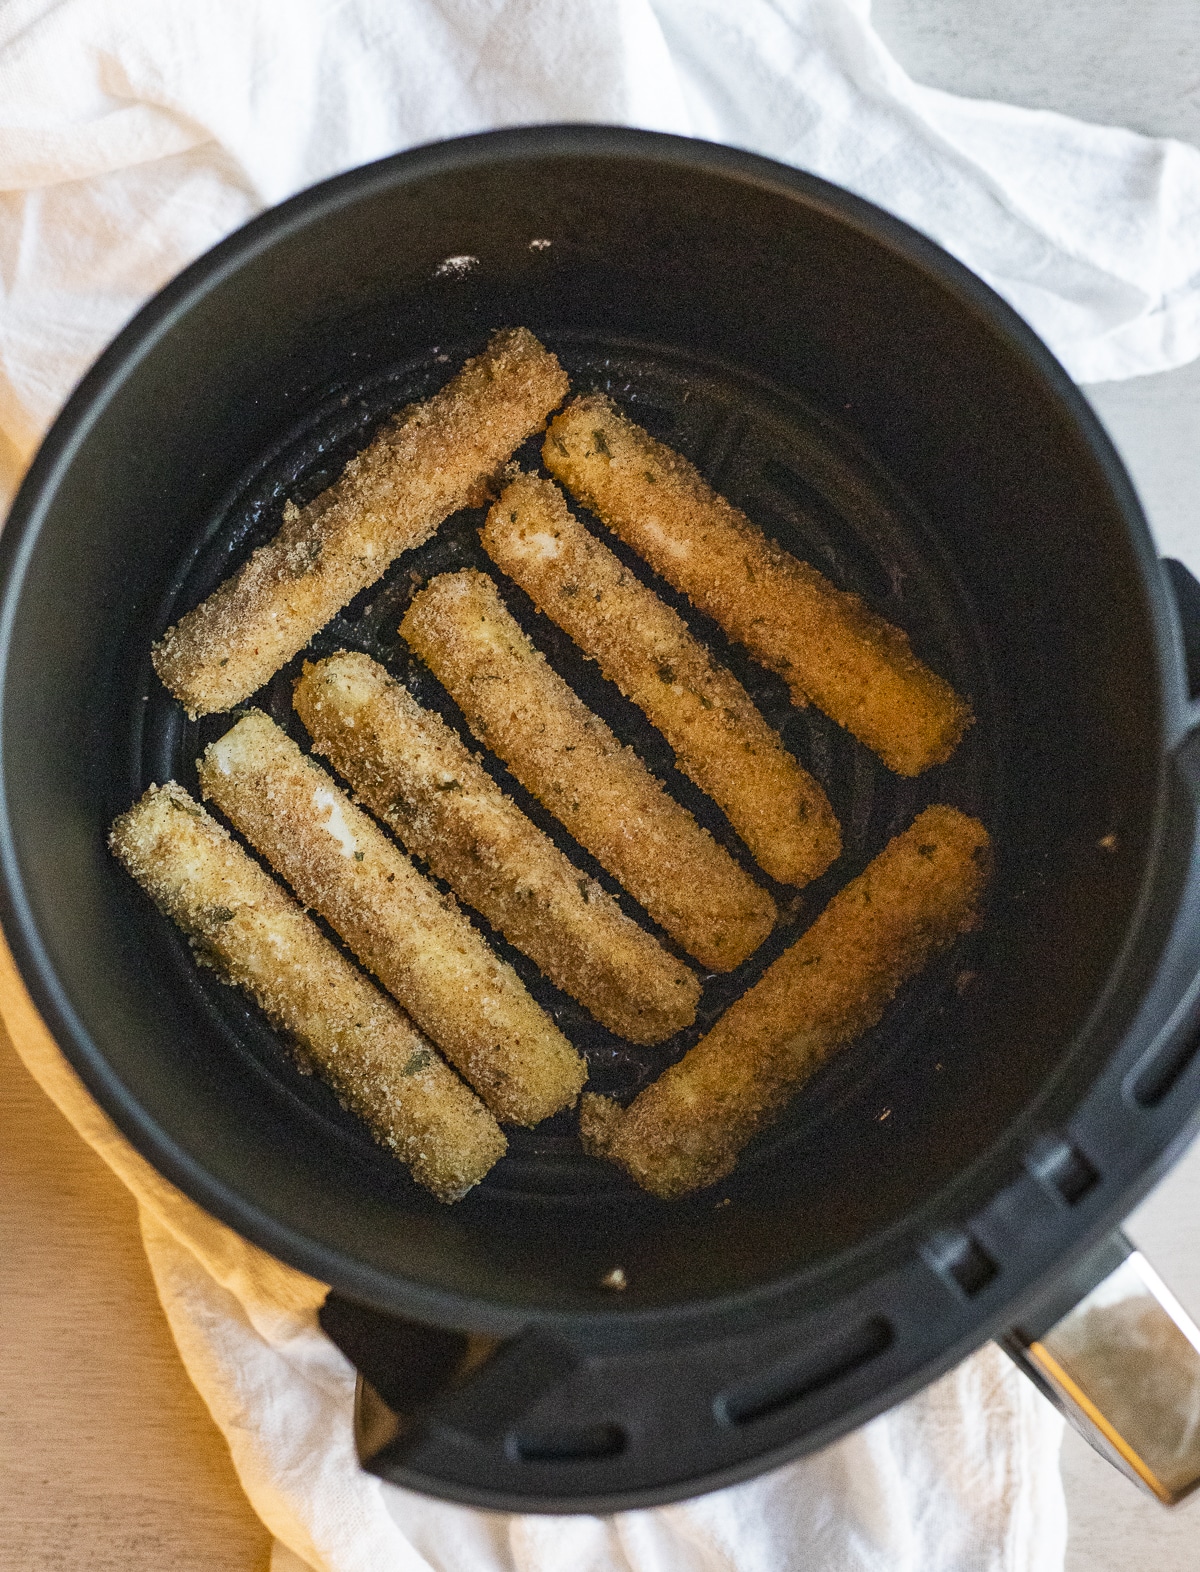 Breaded mozzarella sticks arranged in a single layer in an air fryer basket.